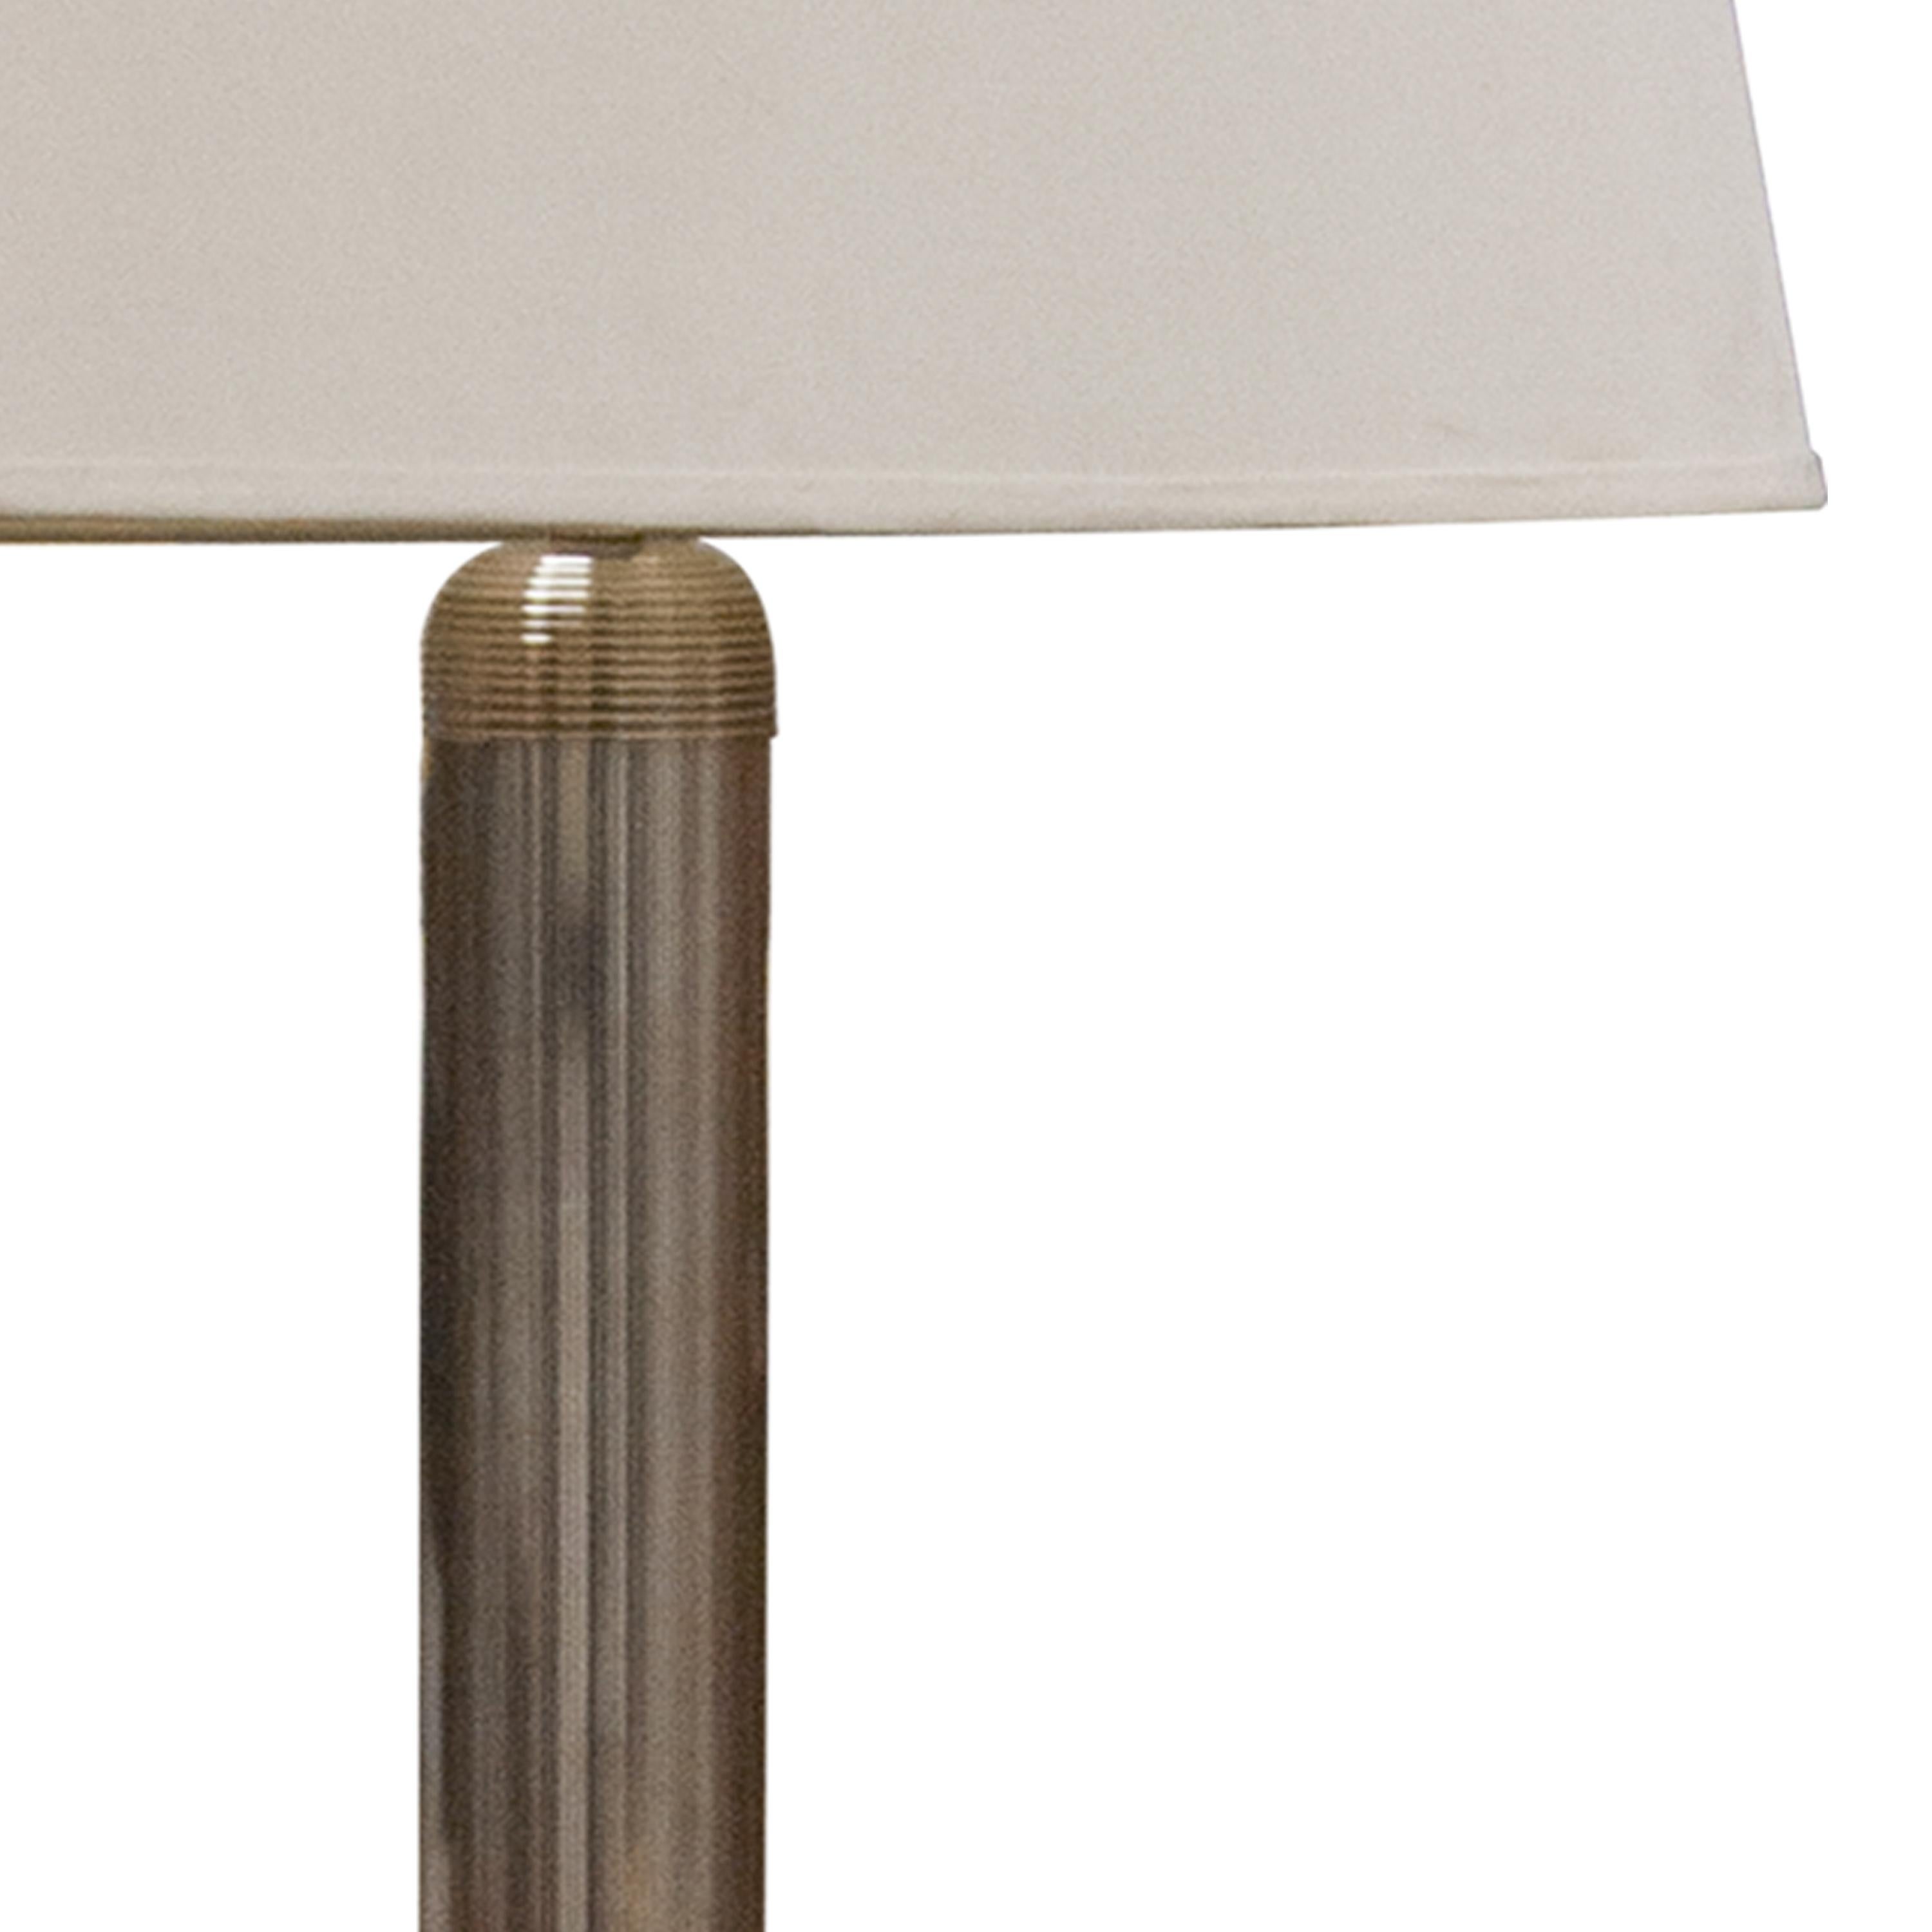 Italian chromed floor lamp with elegant galloned work and white shade.